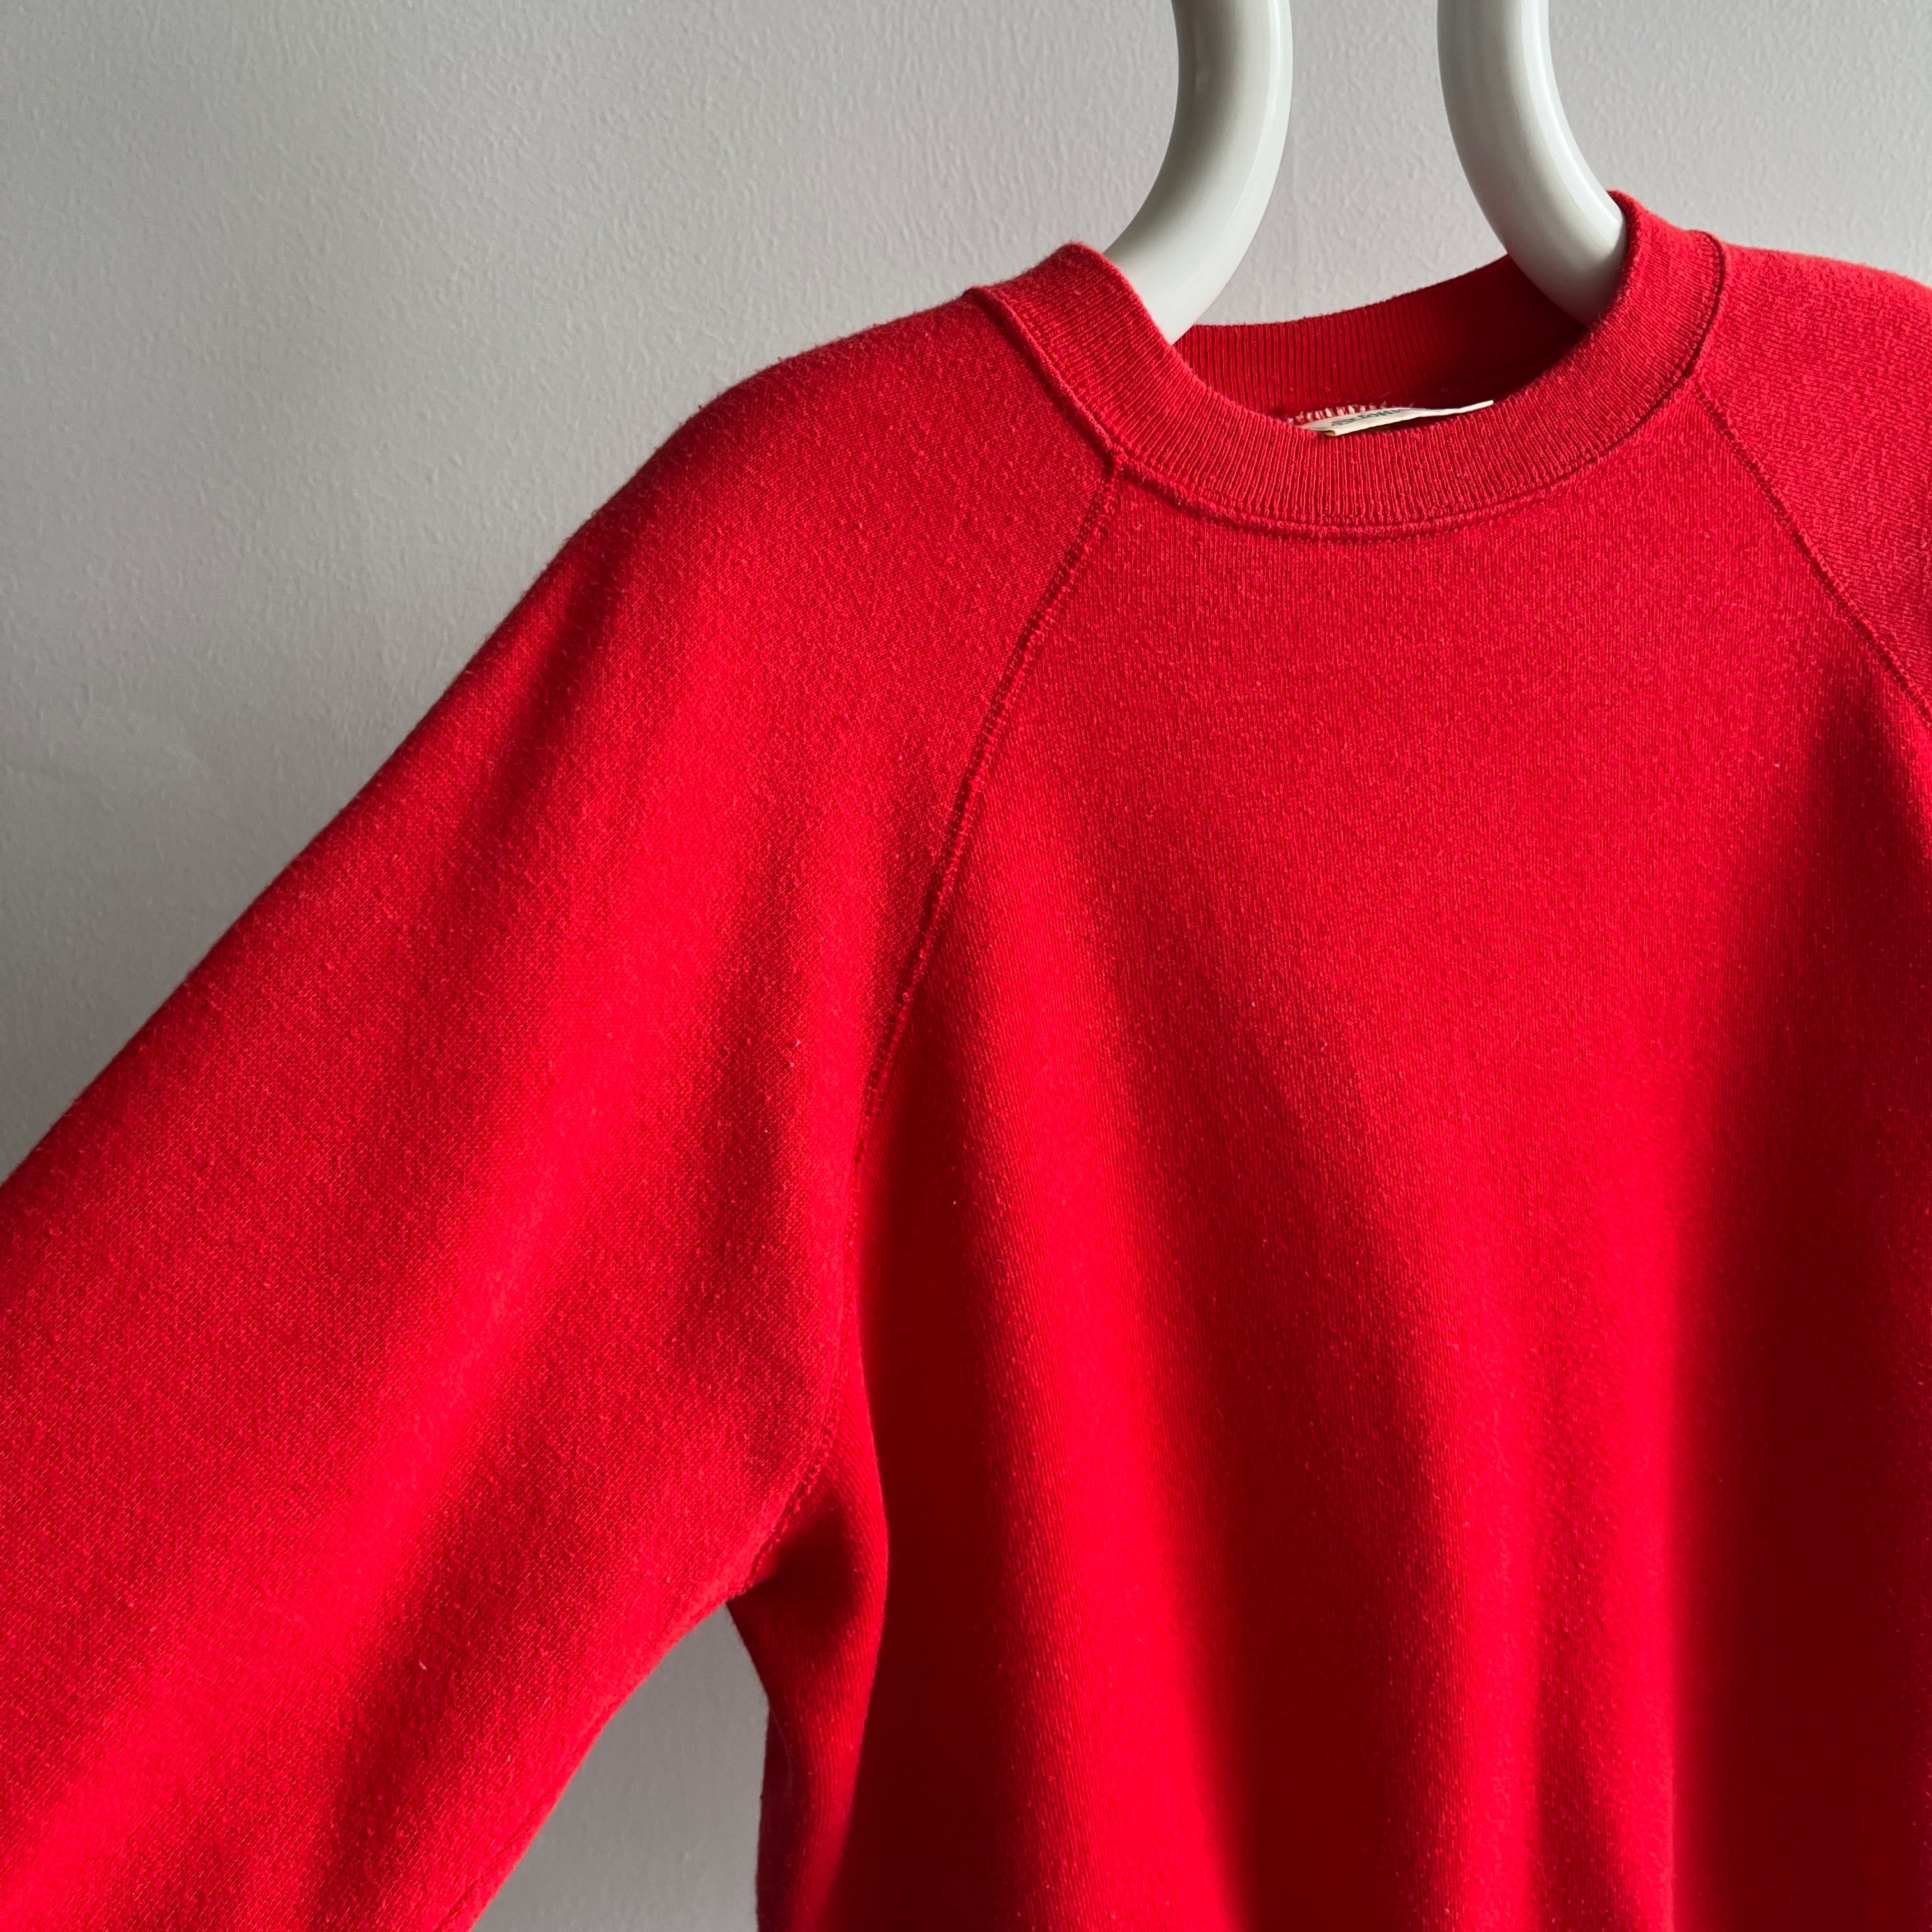 1980s Absolutely Lovely Blank Nail Polish Red Raglan Sweatshirt by St. John Bay - SWOON